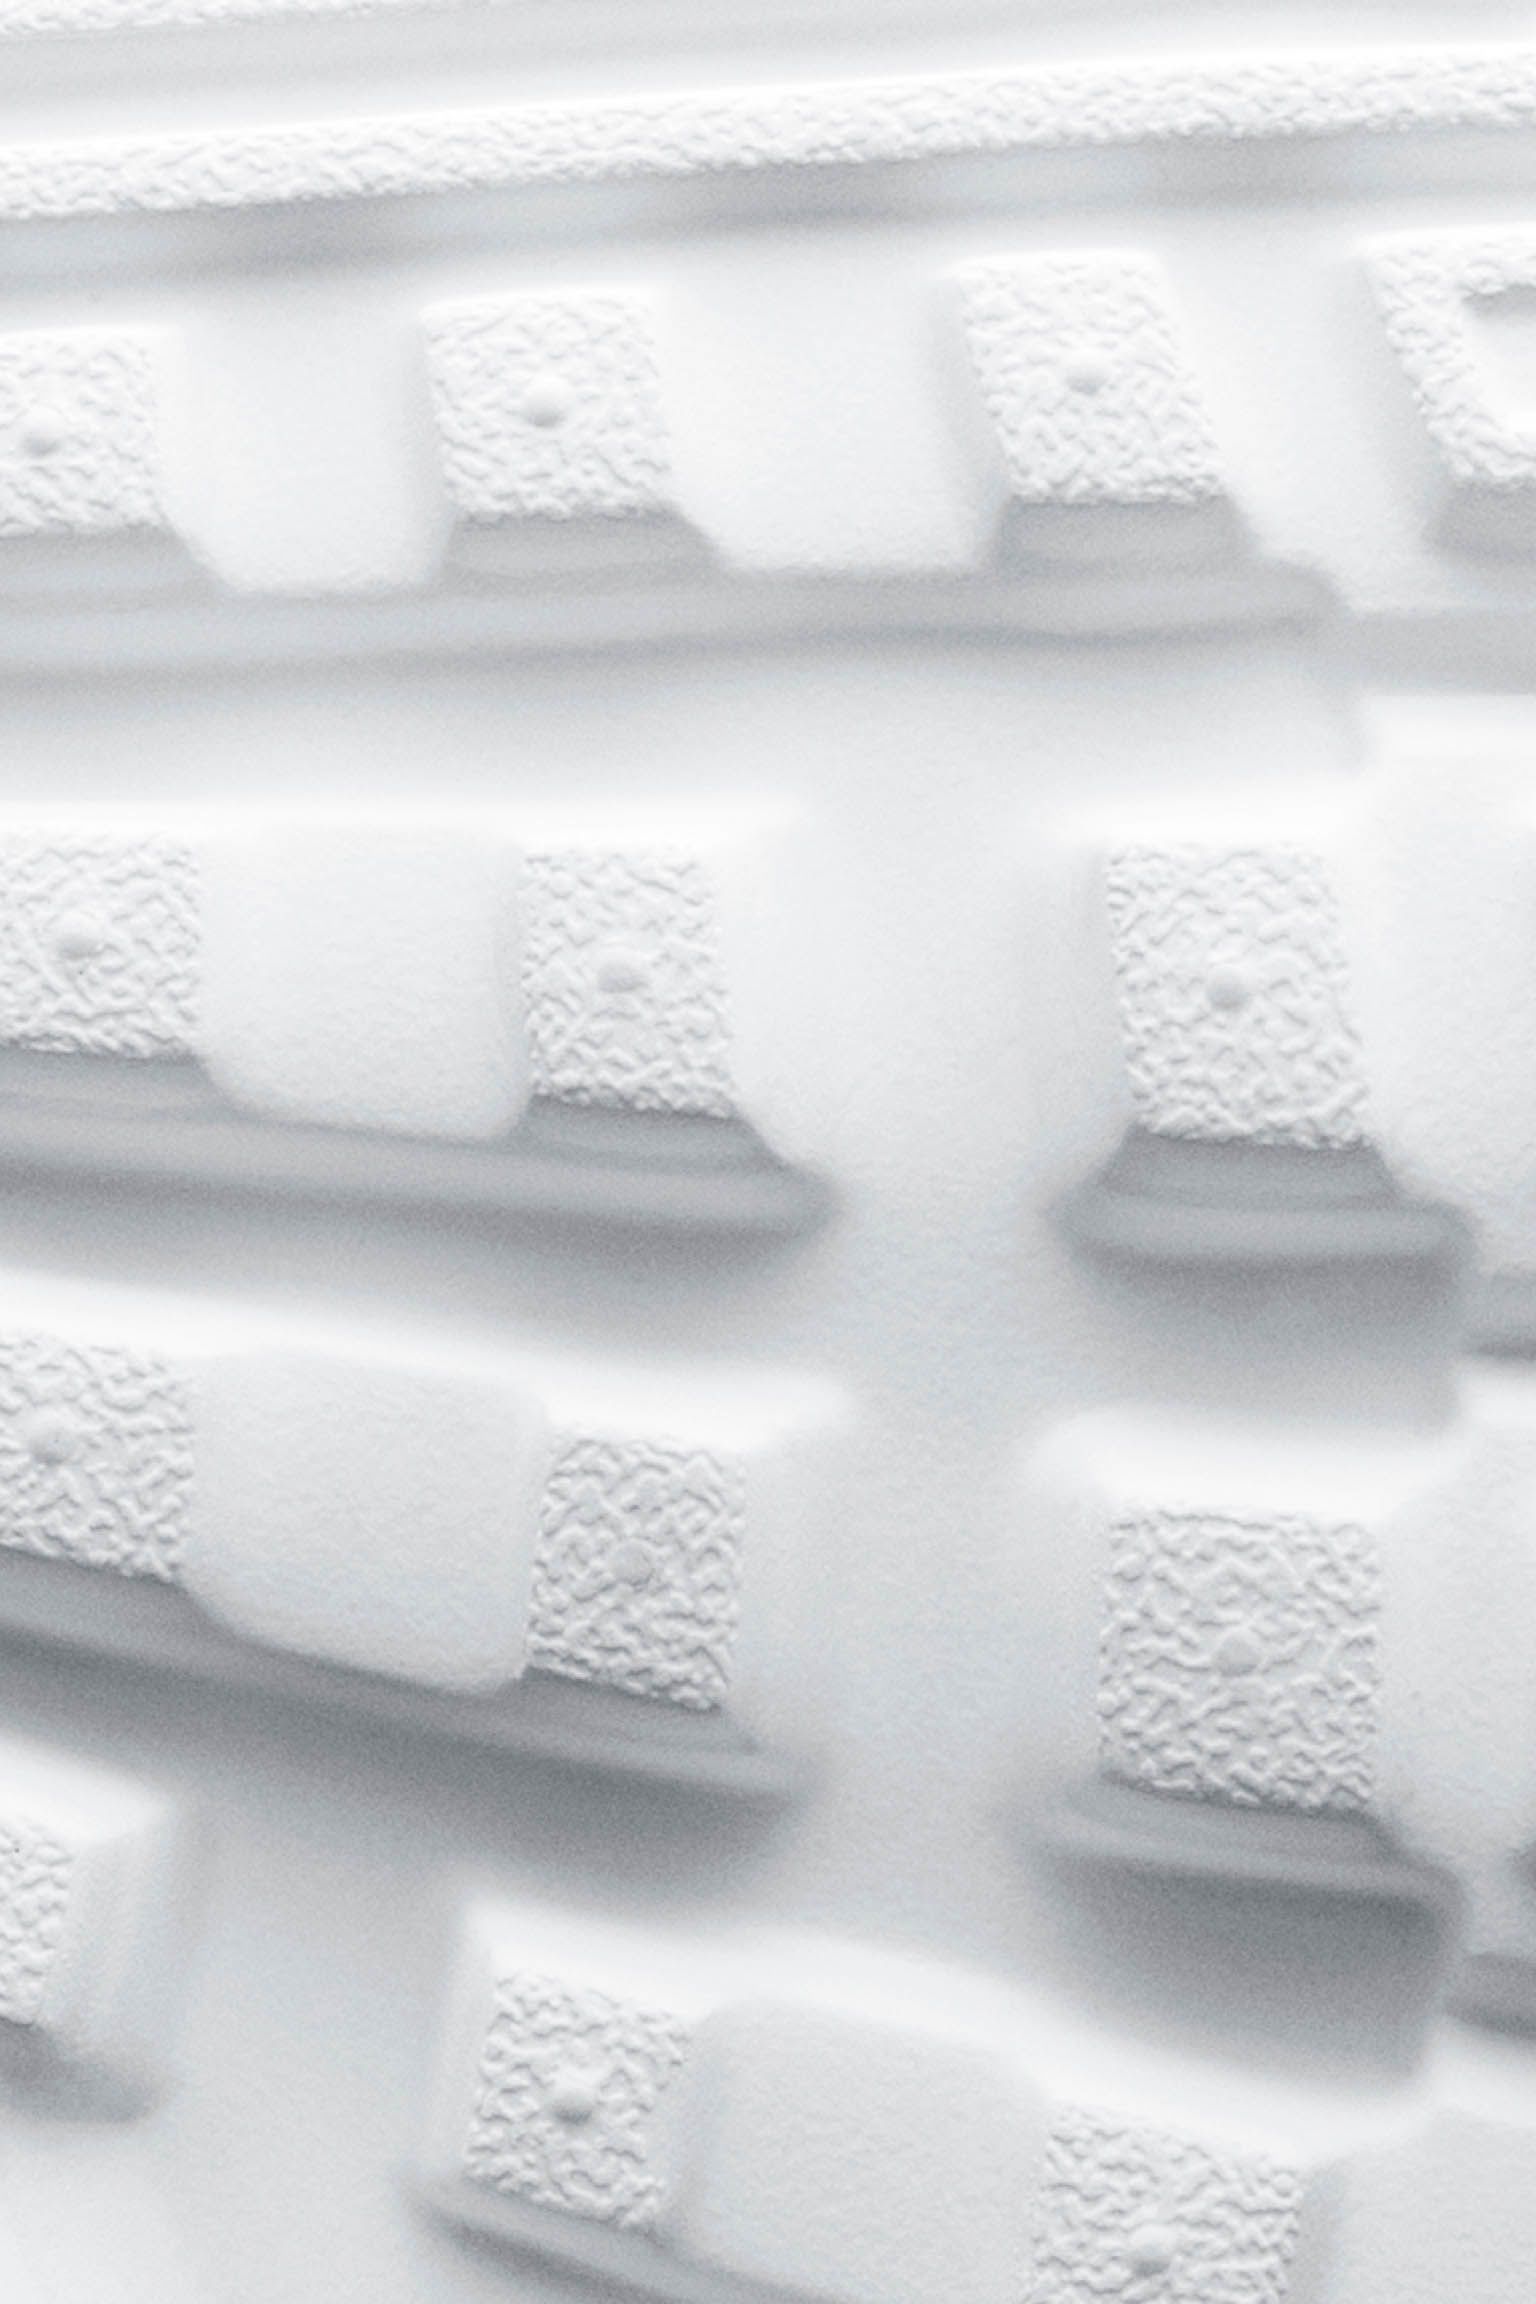 Nike Air Max BW Ultra 'Black & White' Release Date. Nike SNKRS باث بودي روكس